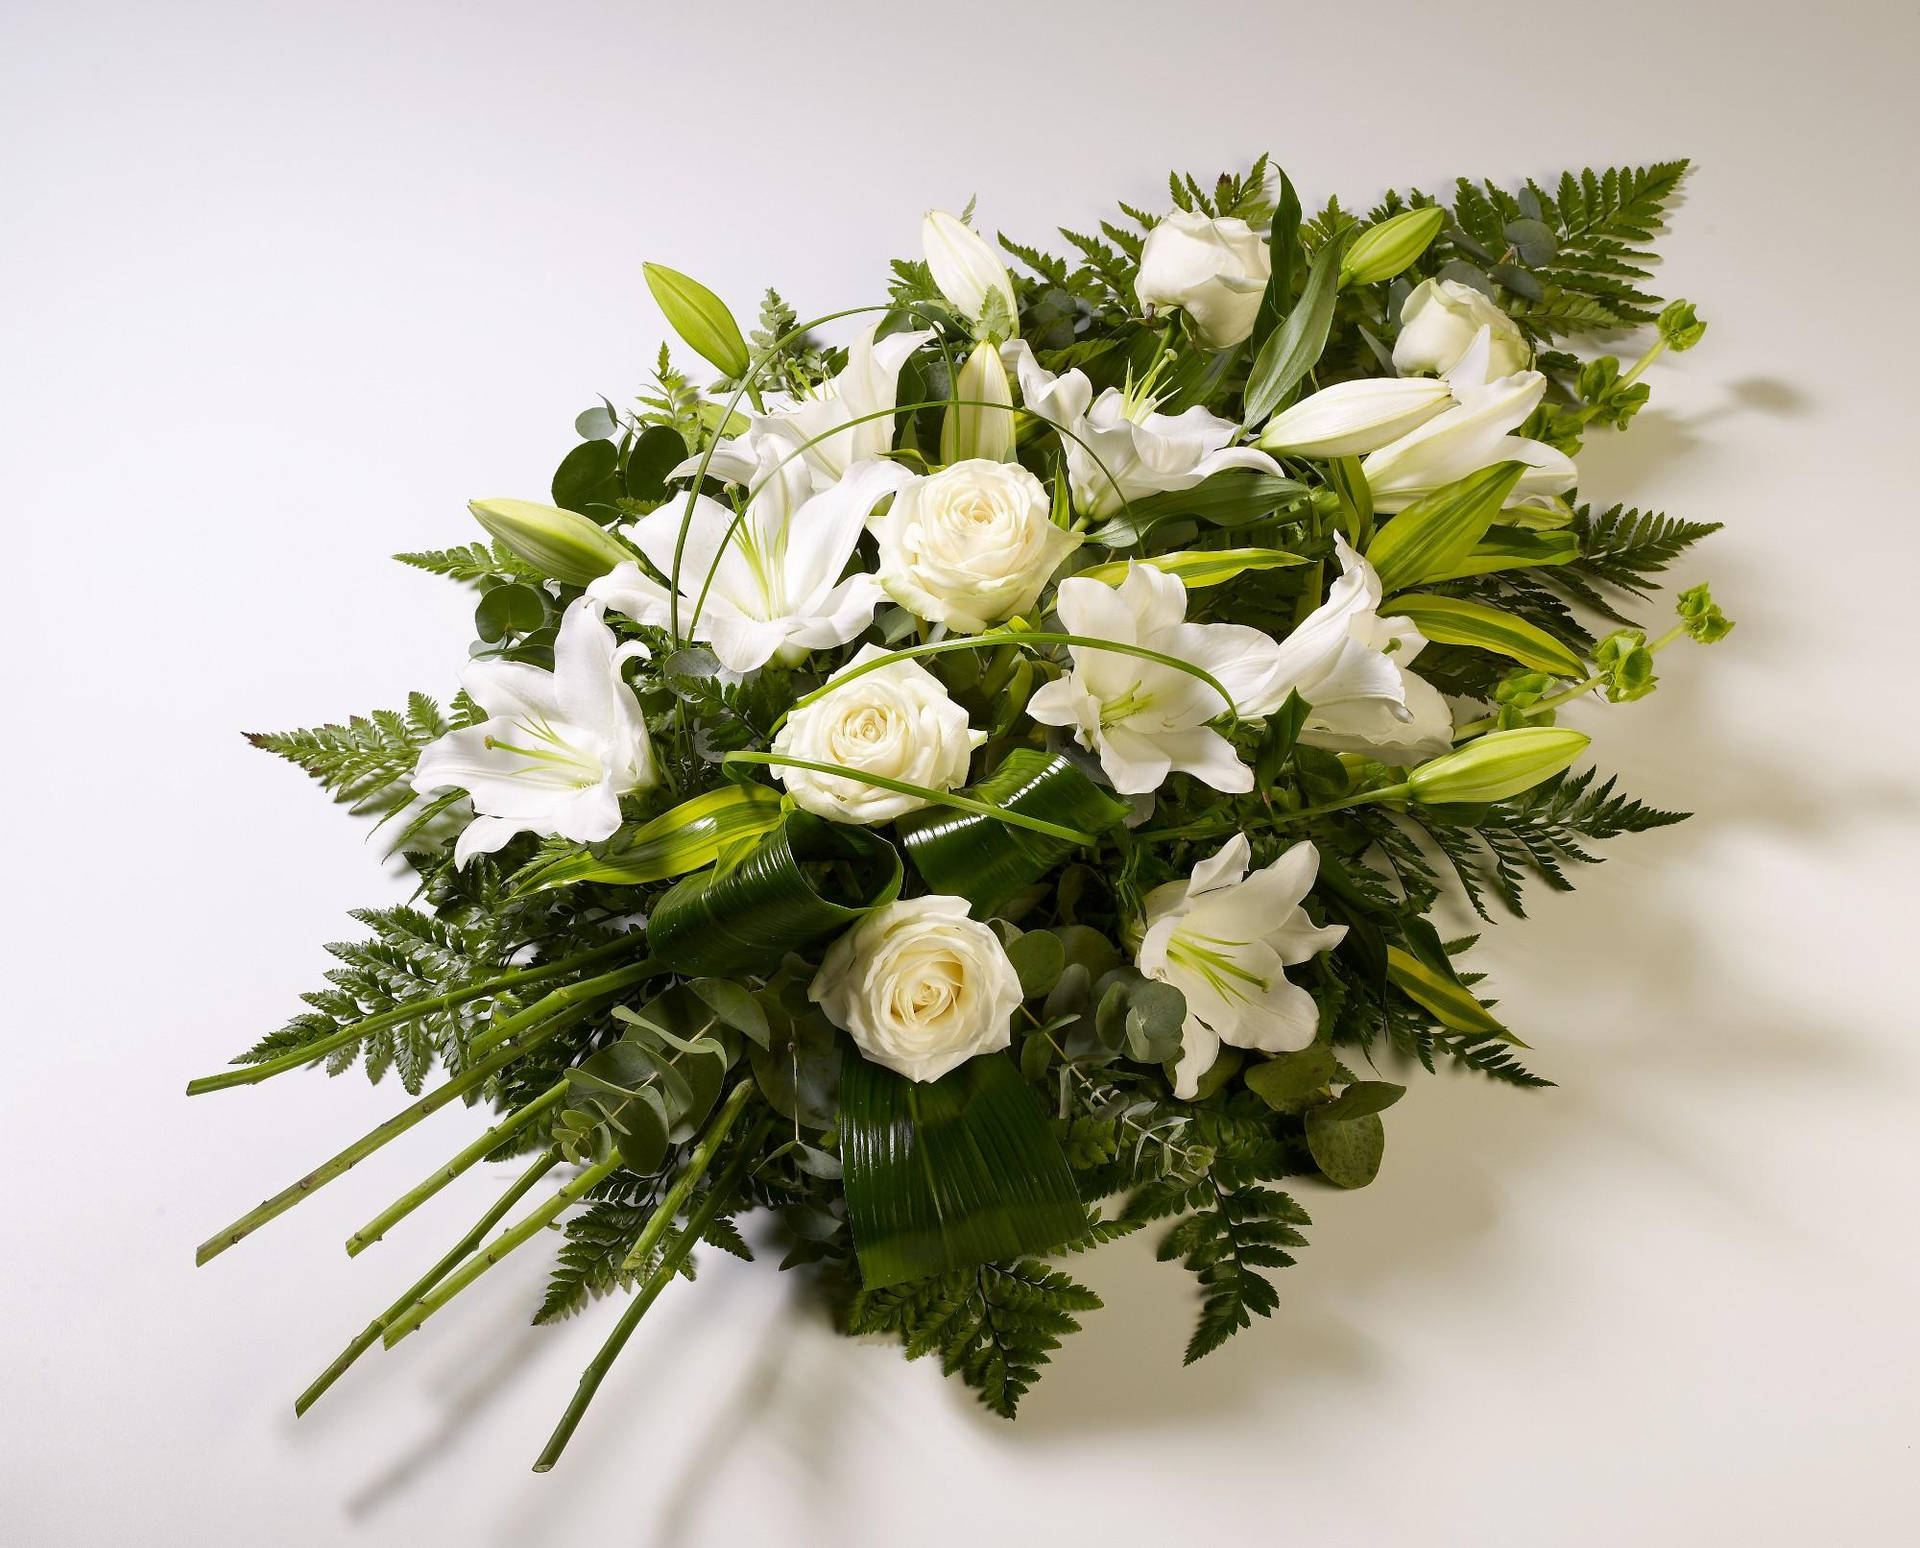 Funeral Flower Arrangement Background